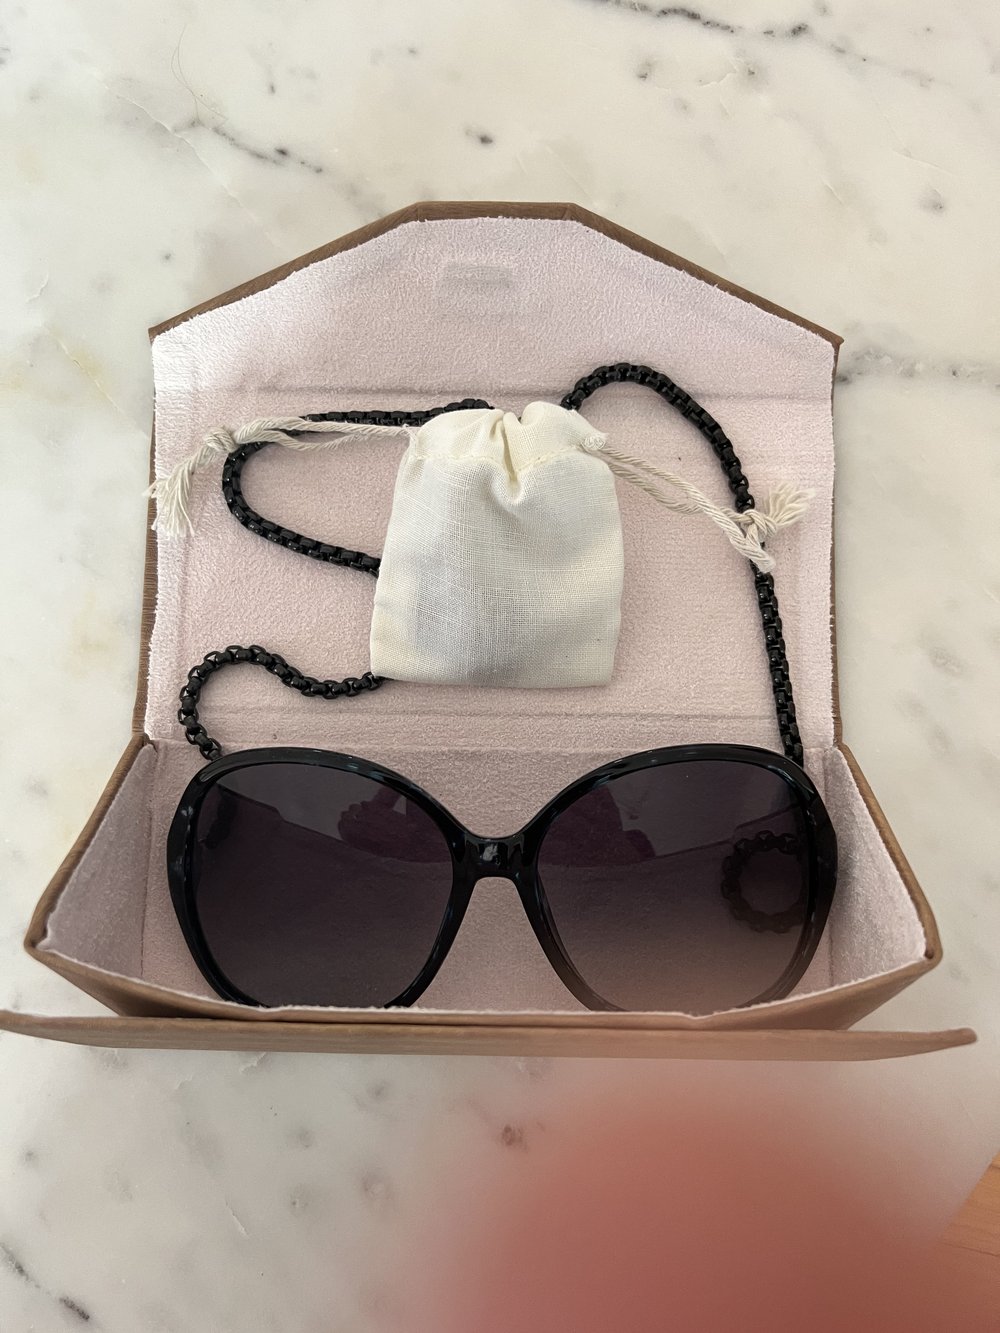 Chanel eyeglass case - Gem